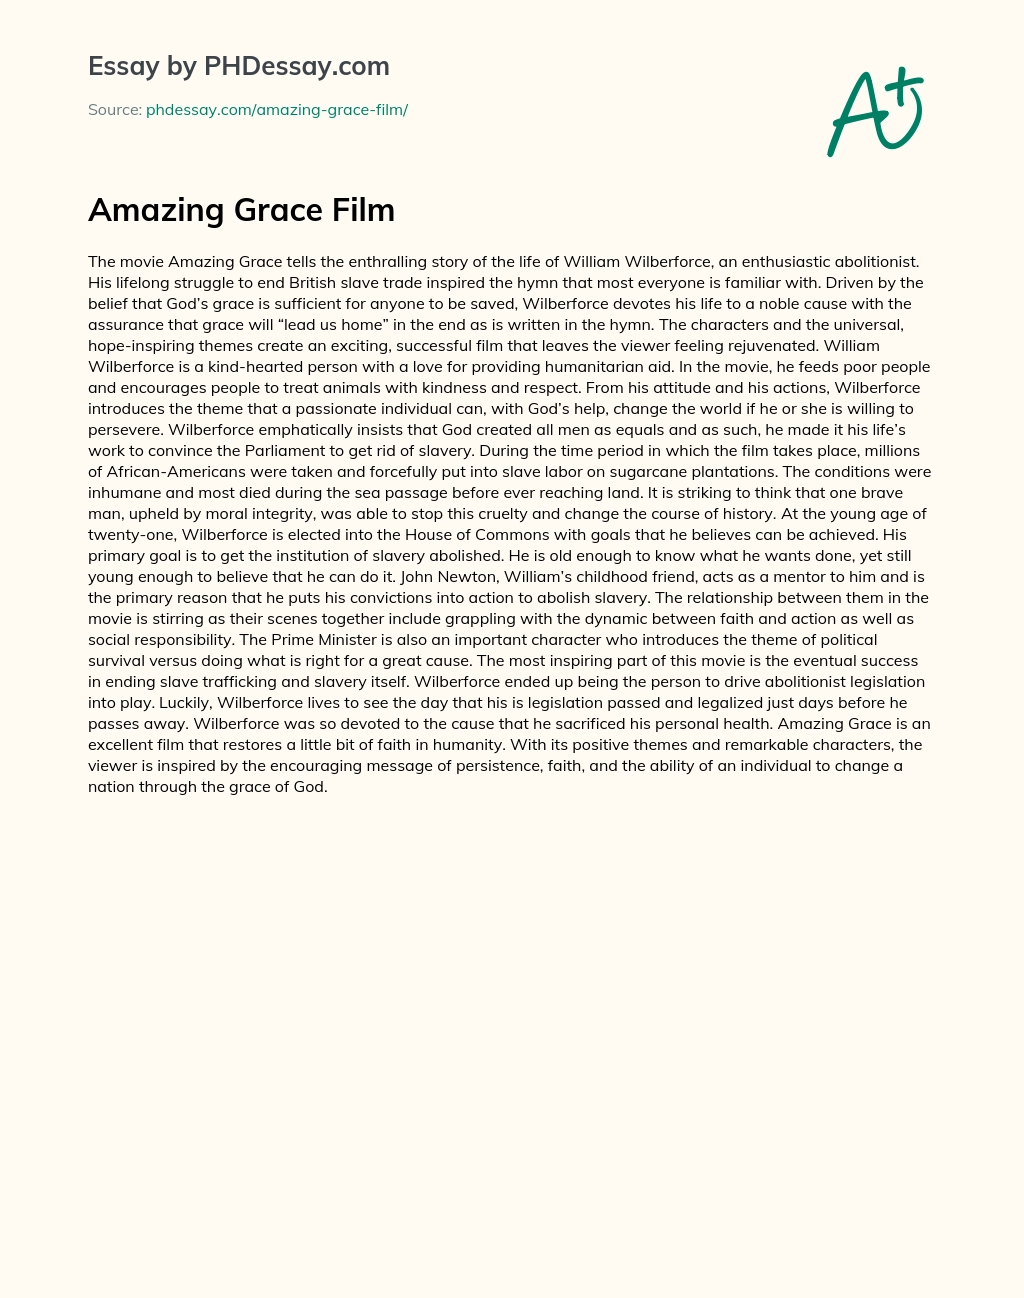 Amazing Grace Film essay